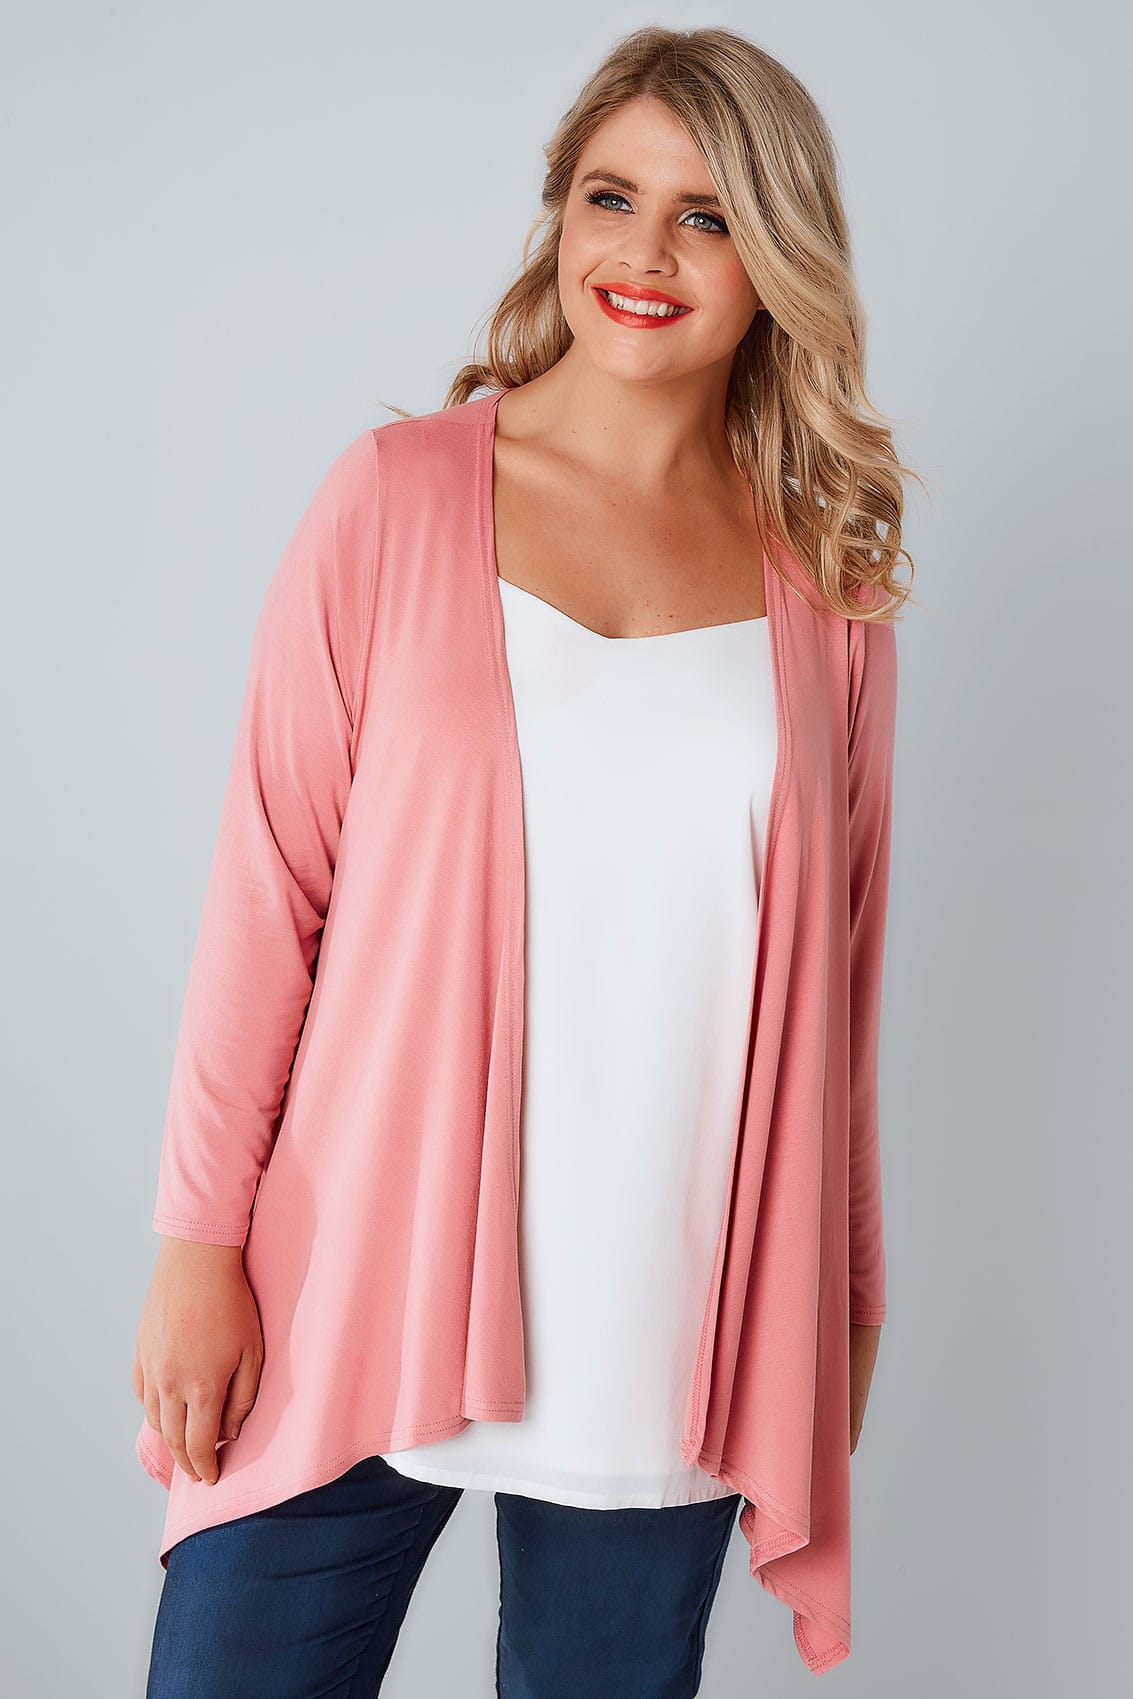 Blush Pink Edge To Edge Waterfall Jersey Cardigan, Plus size 16 to 36